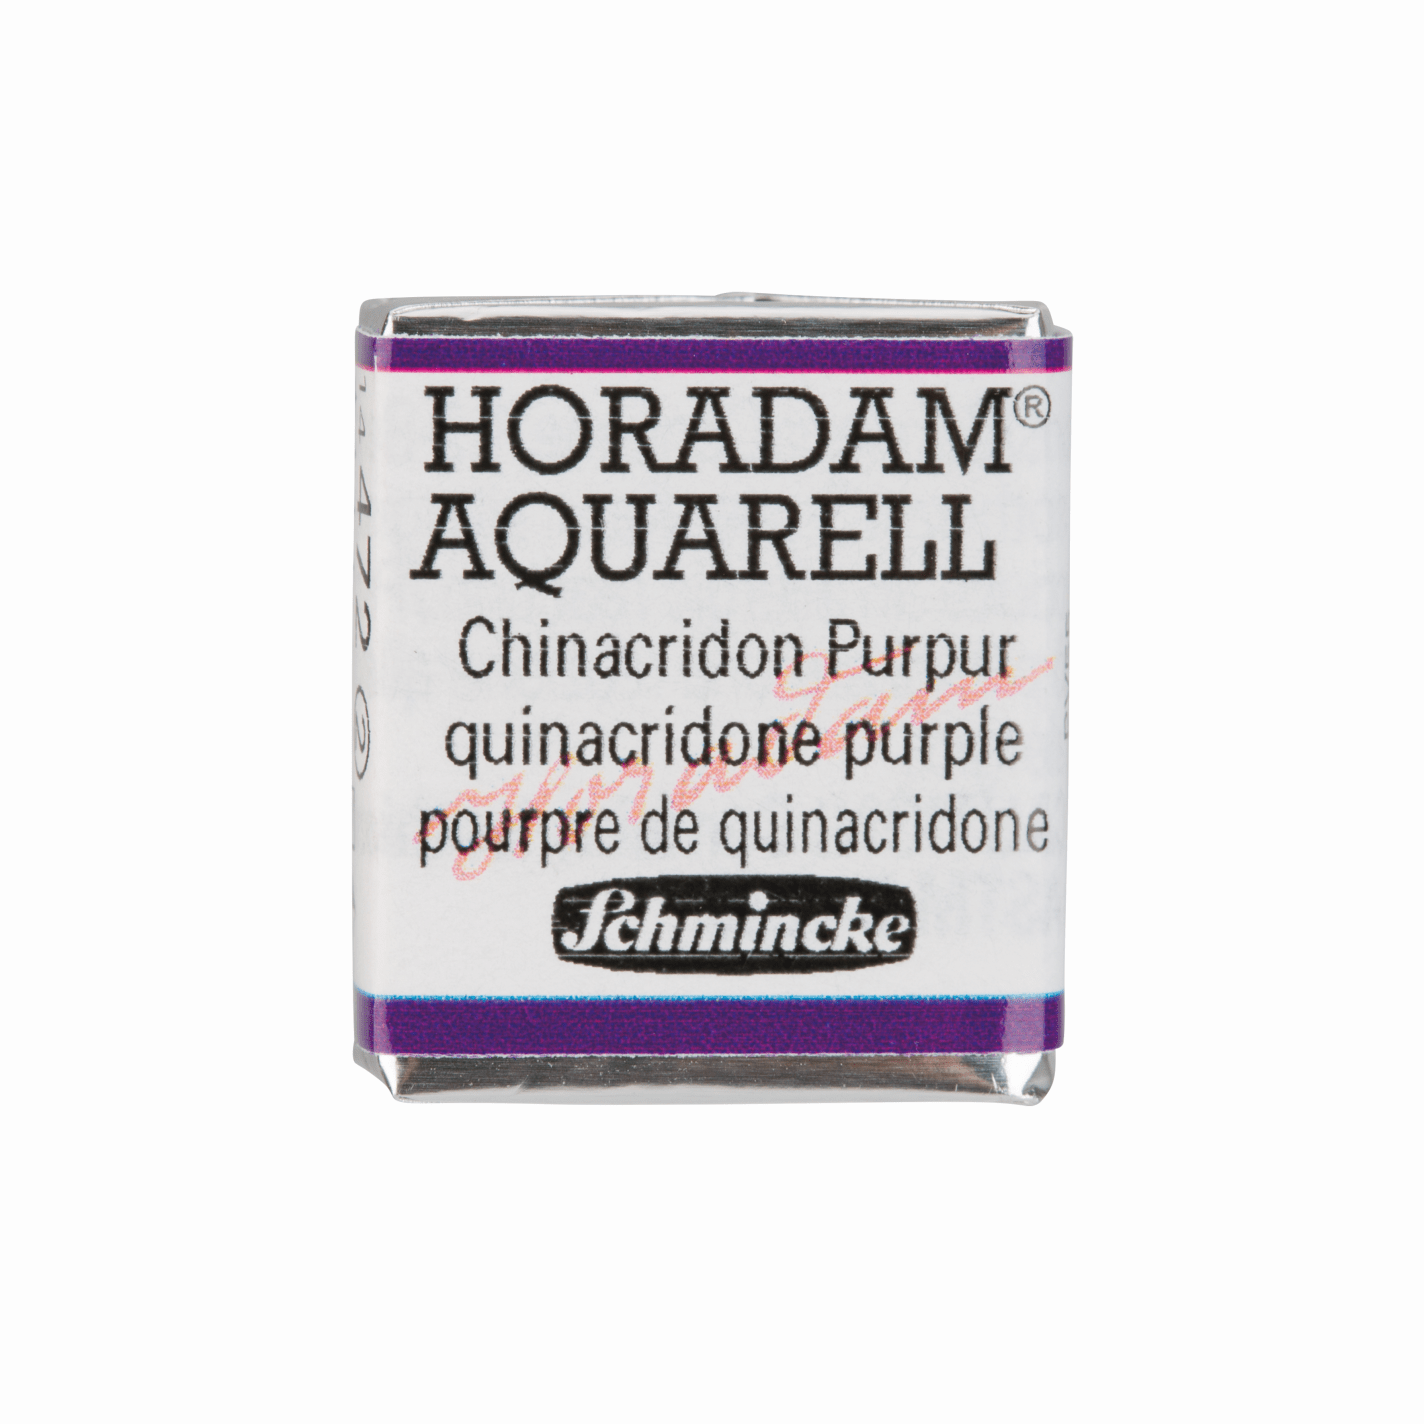 Schmincke Horadam Aquarell pans 1/2 pan Quinacridone Purple